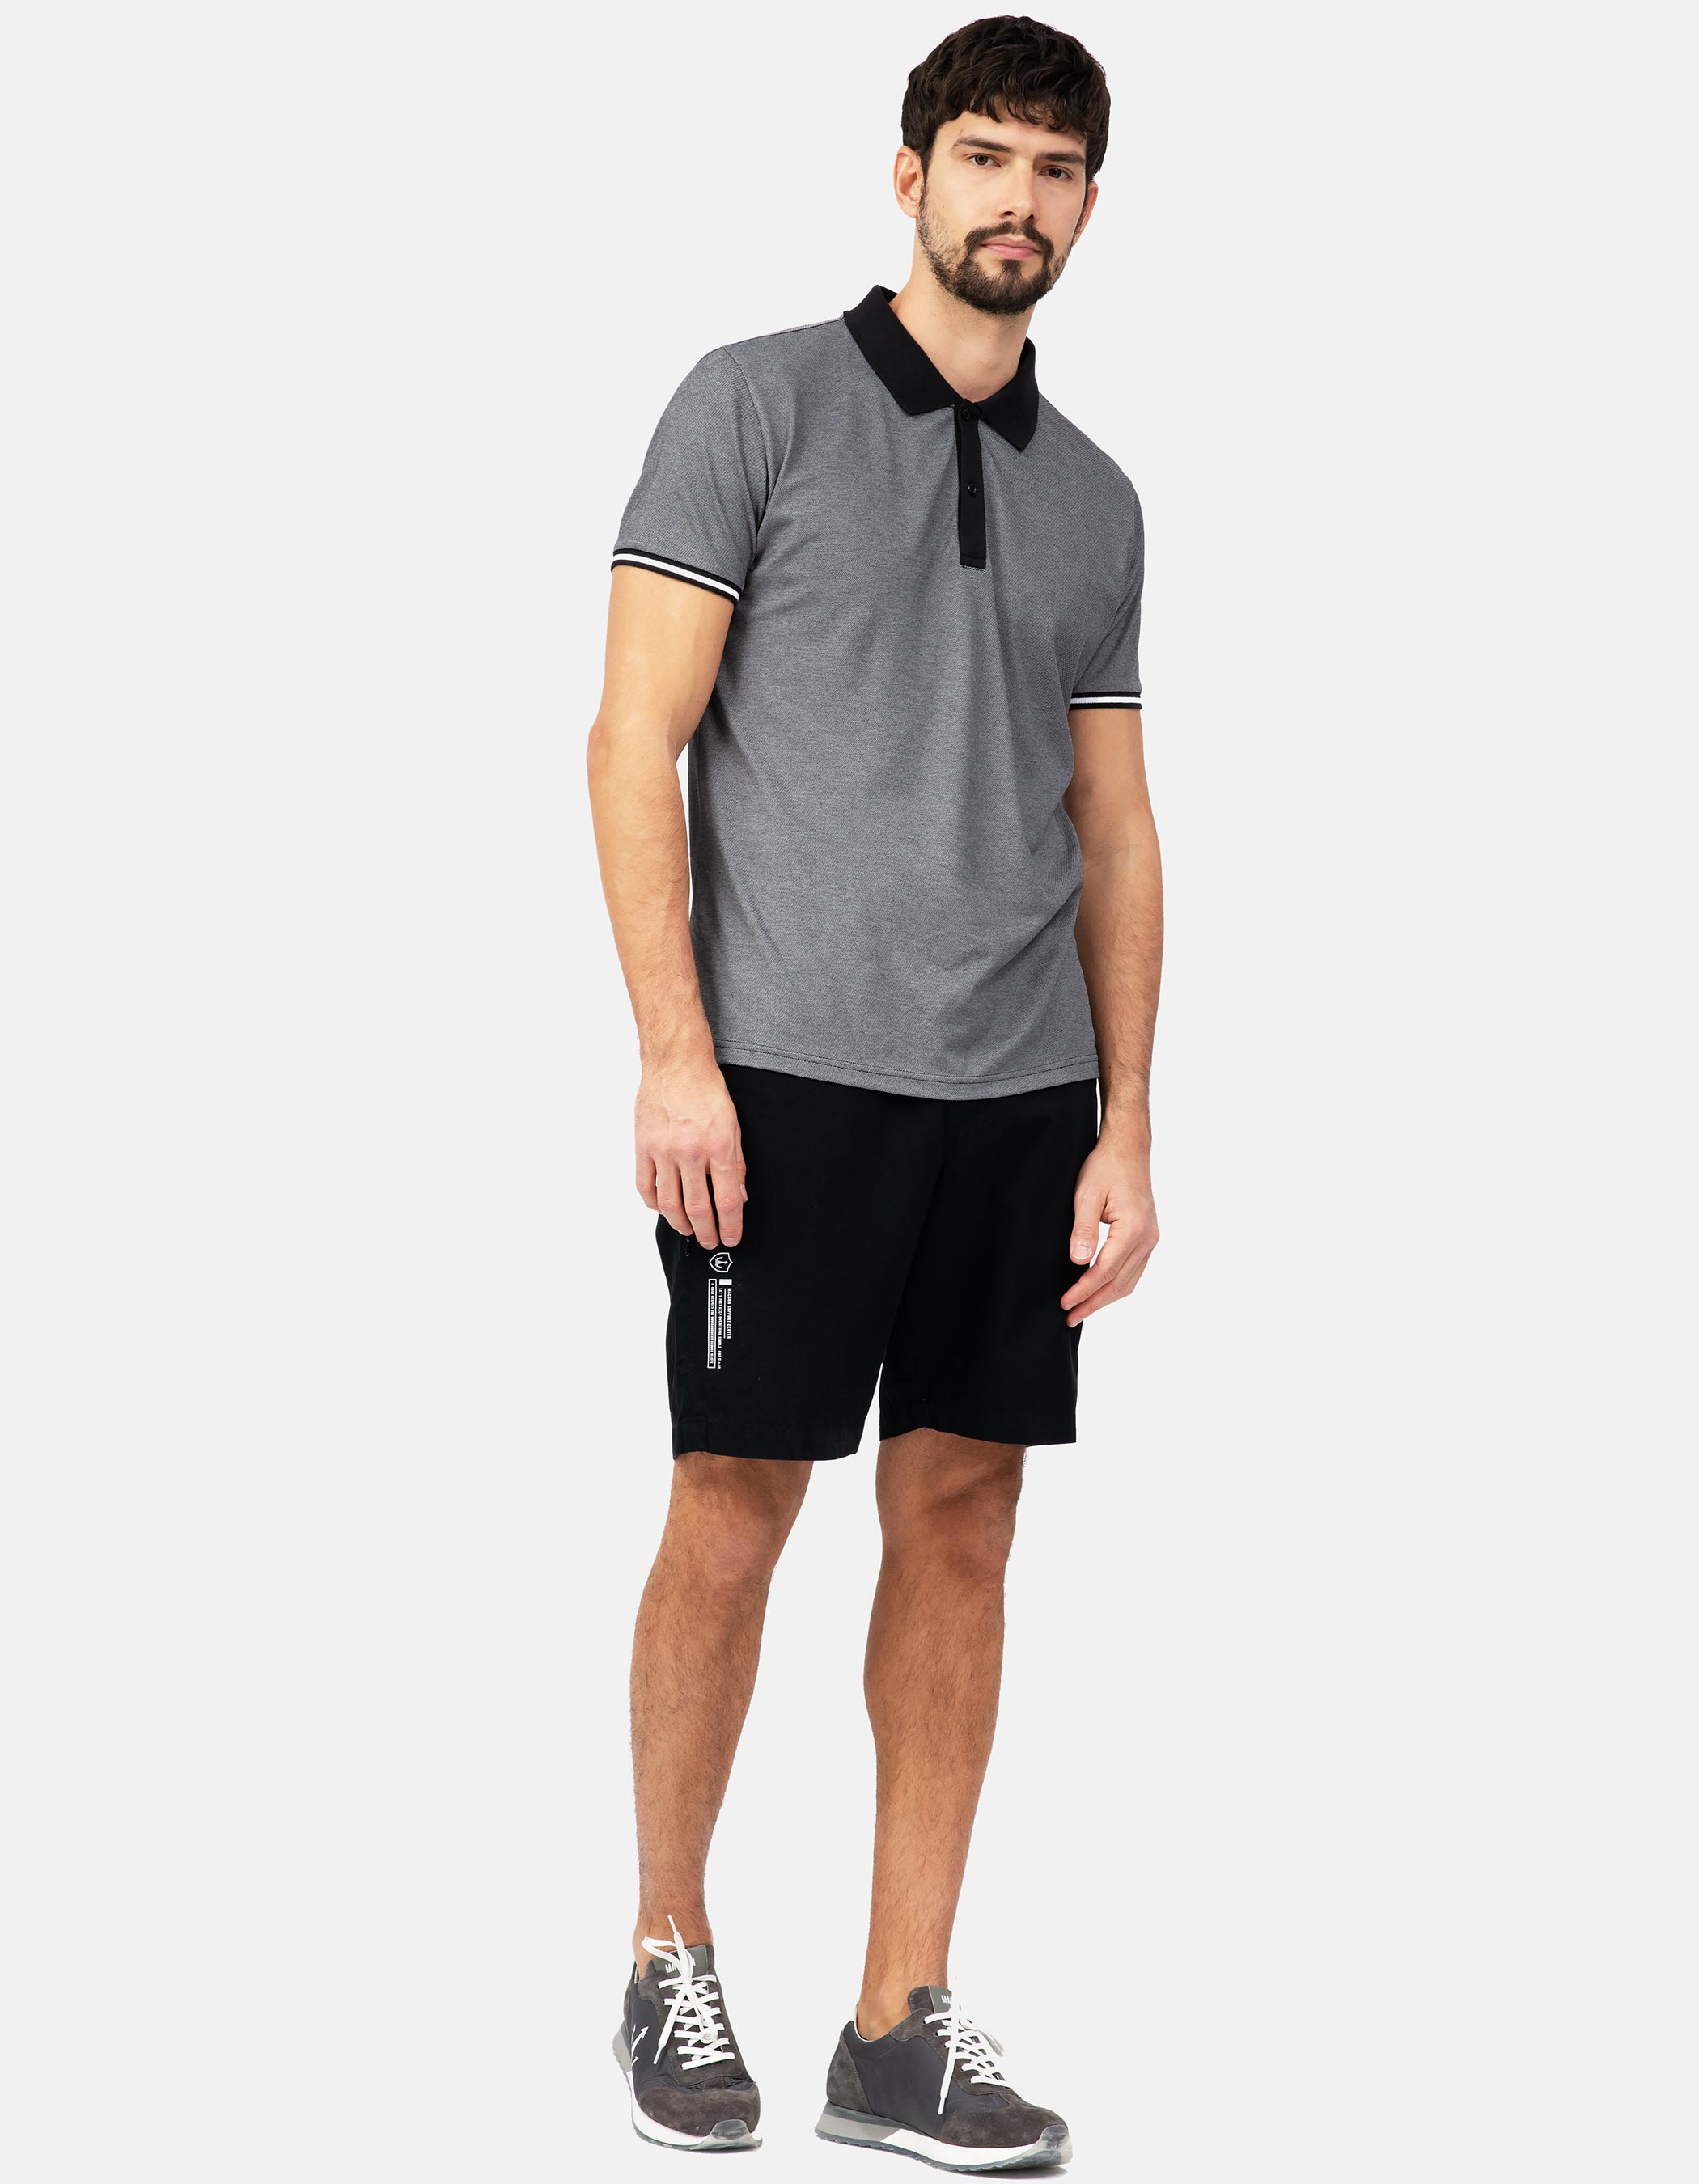 Bermuda shorts with hidden pocket 3